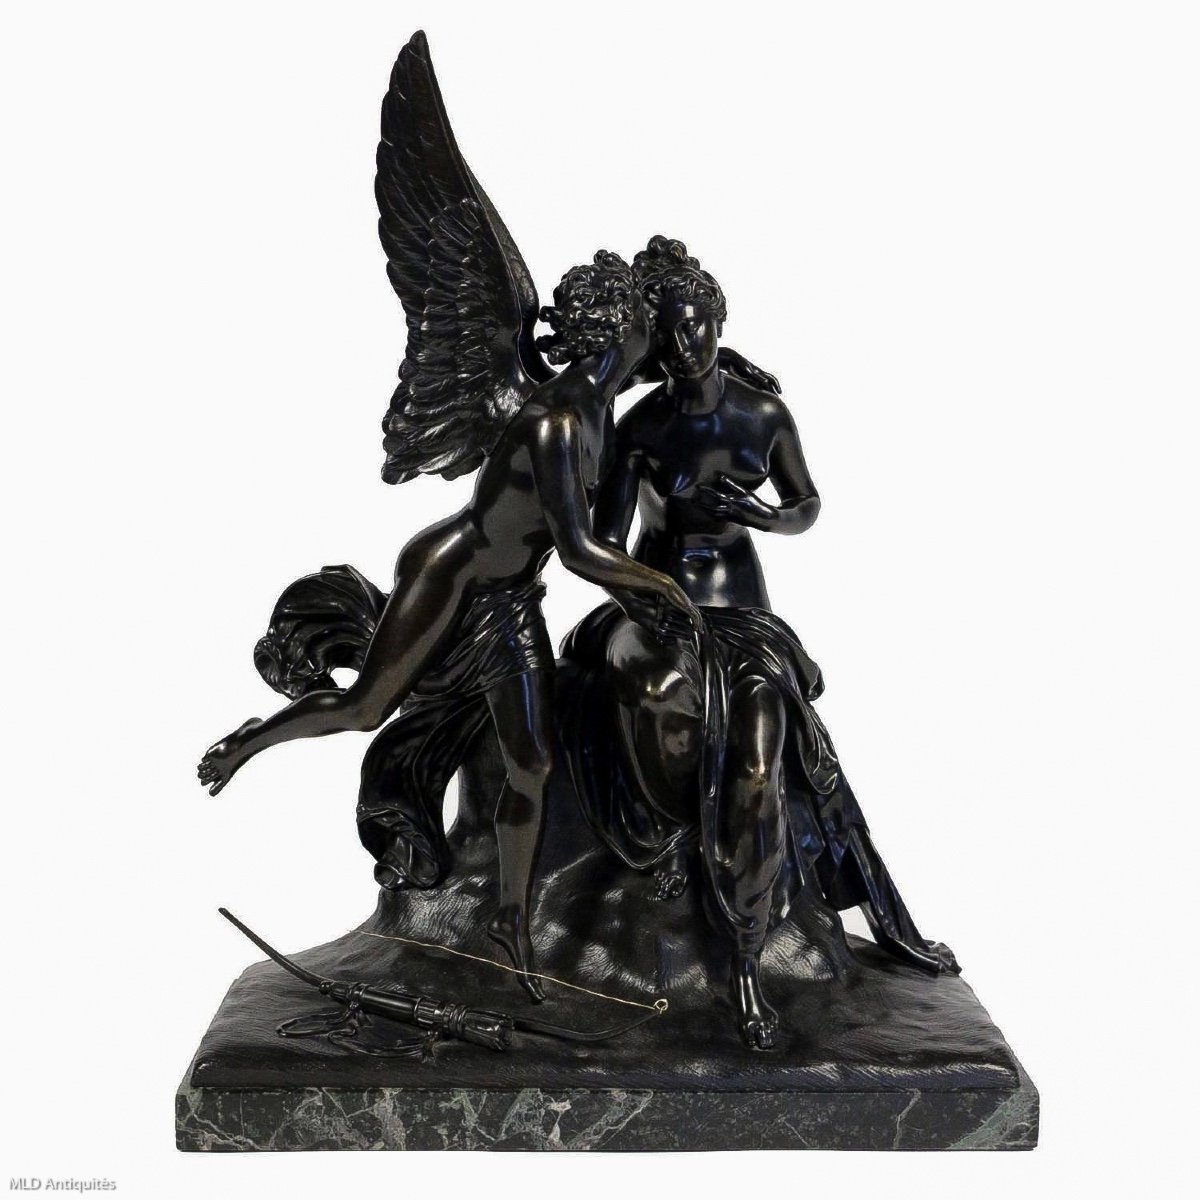 French Romantic Period, Patinated Bronze Sculpture Circa 1830-1840